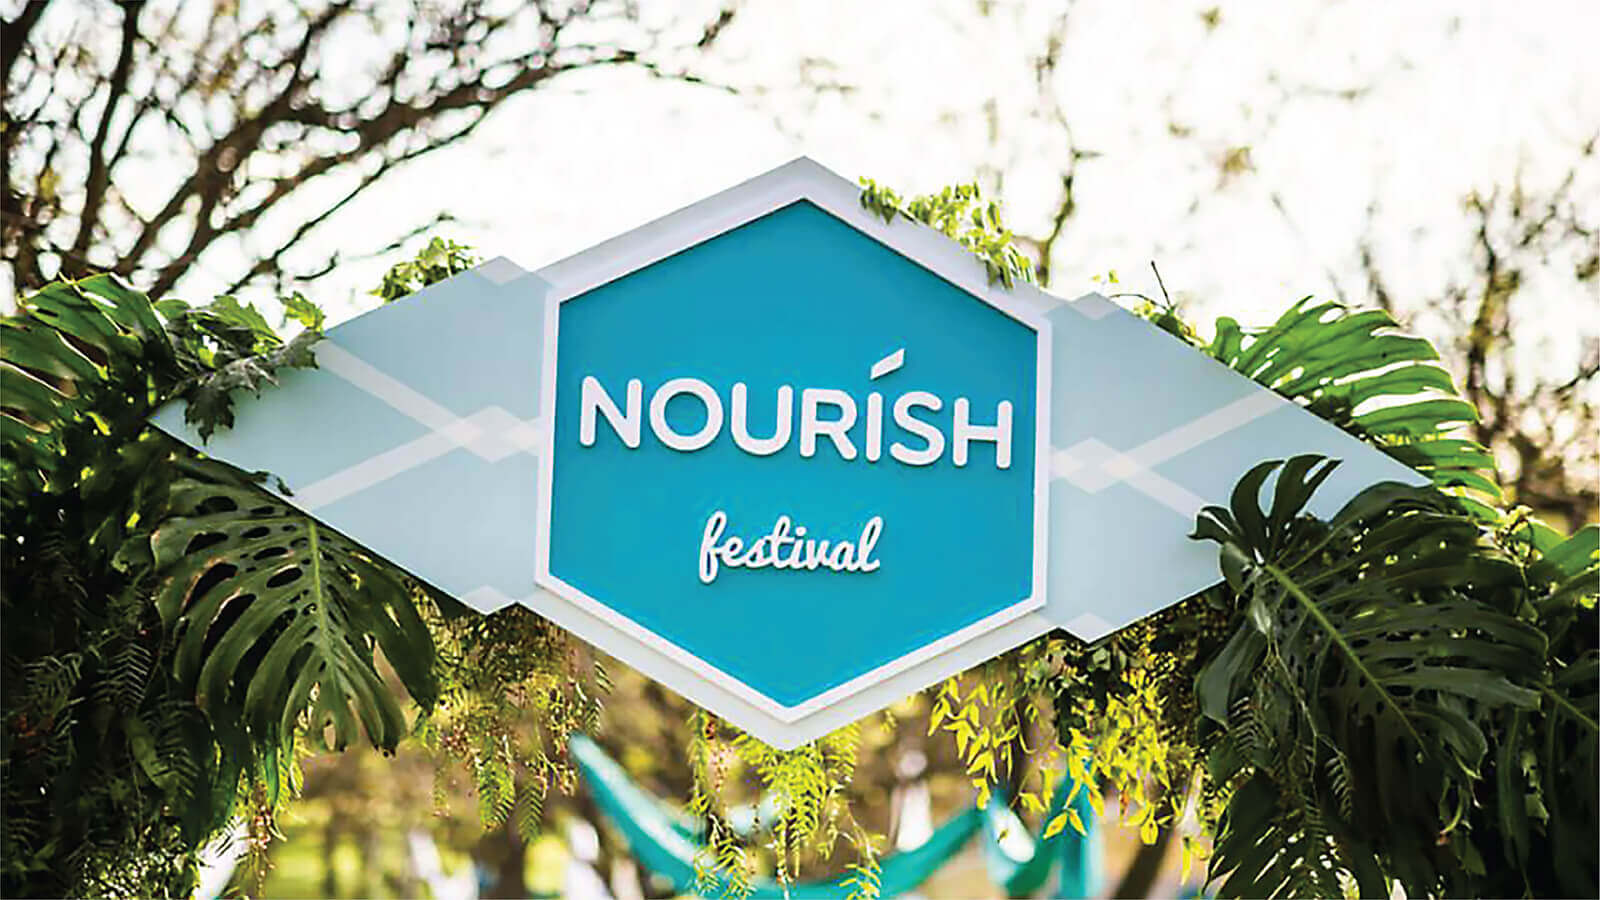 Nourish Festival event signage archway closeup